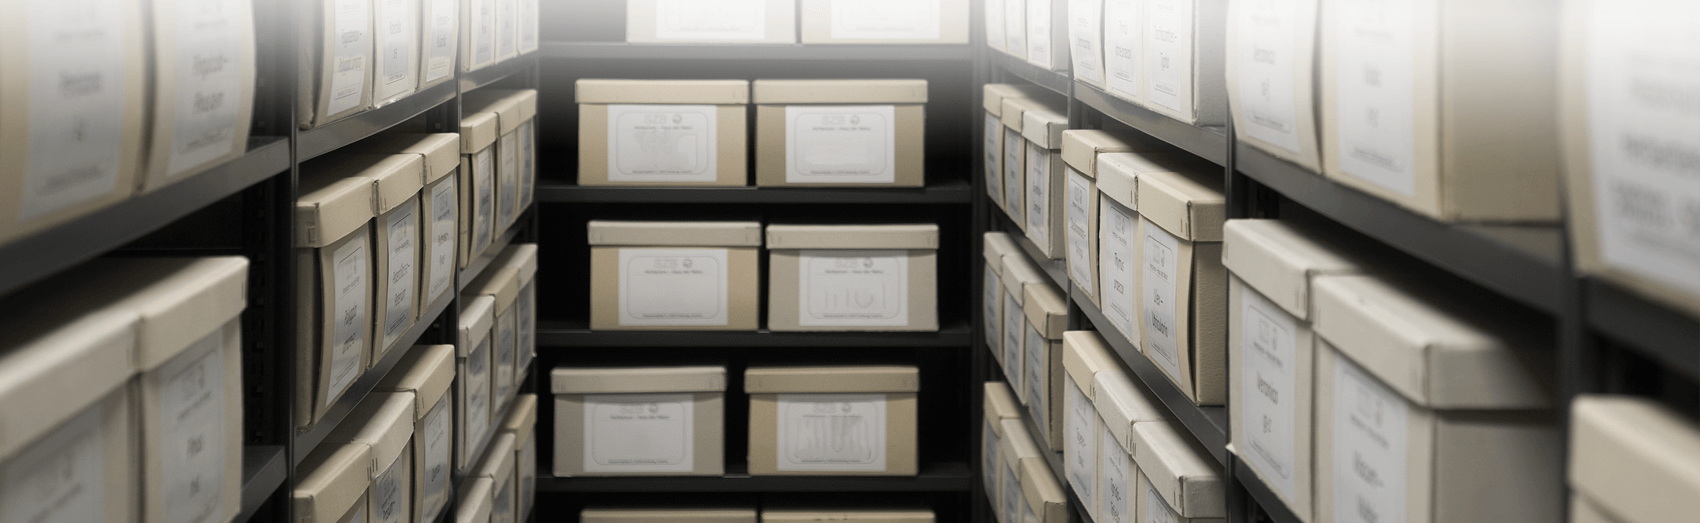 archive storage thornbury self storage